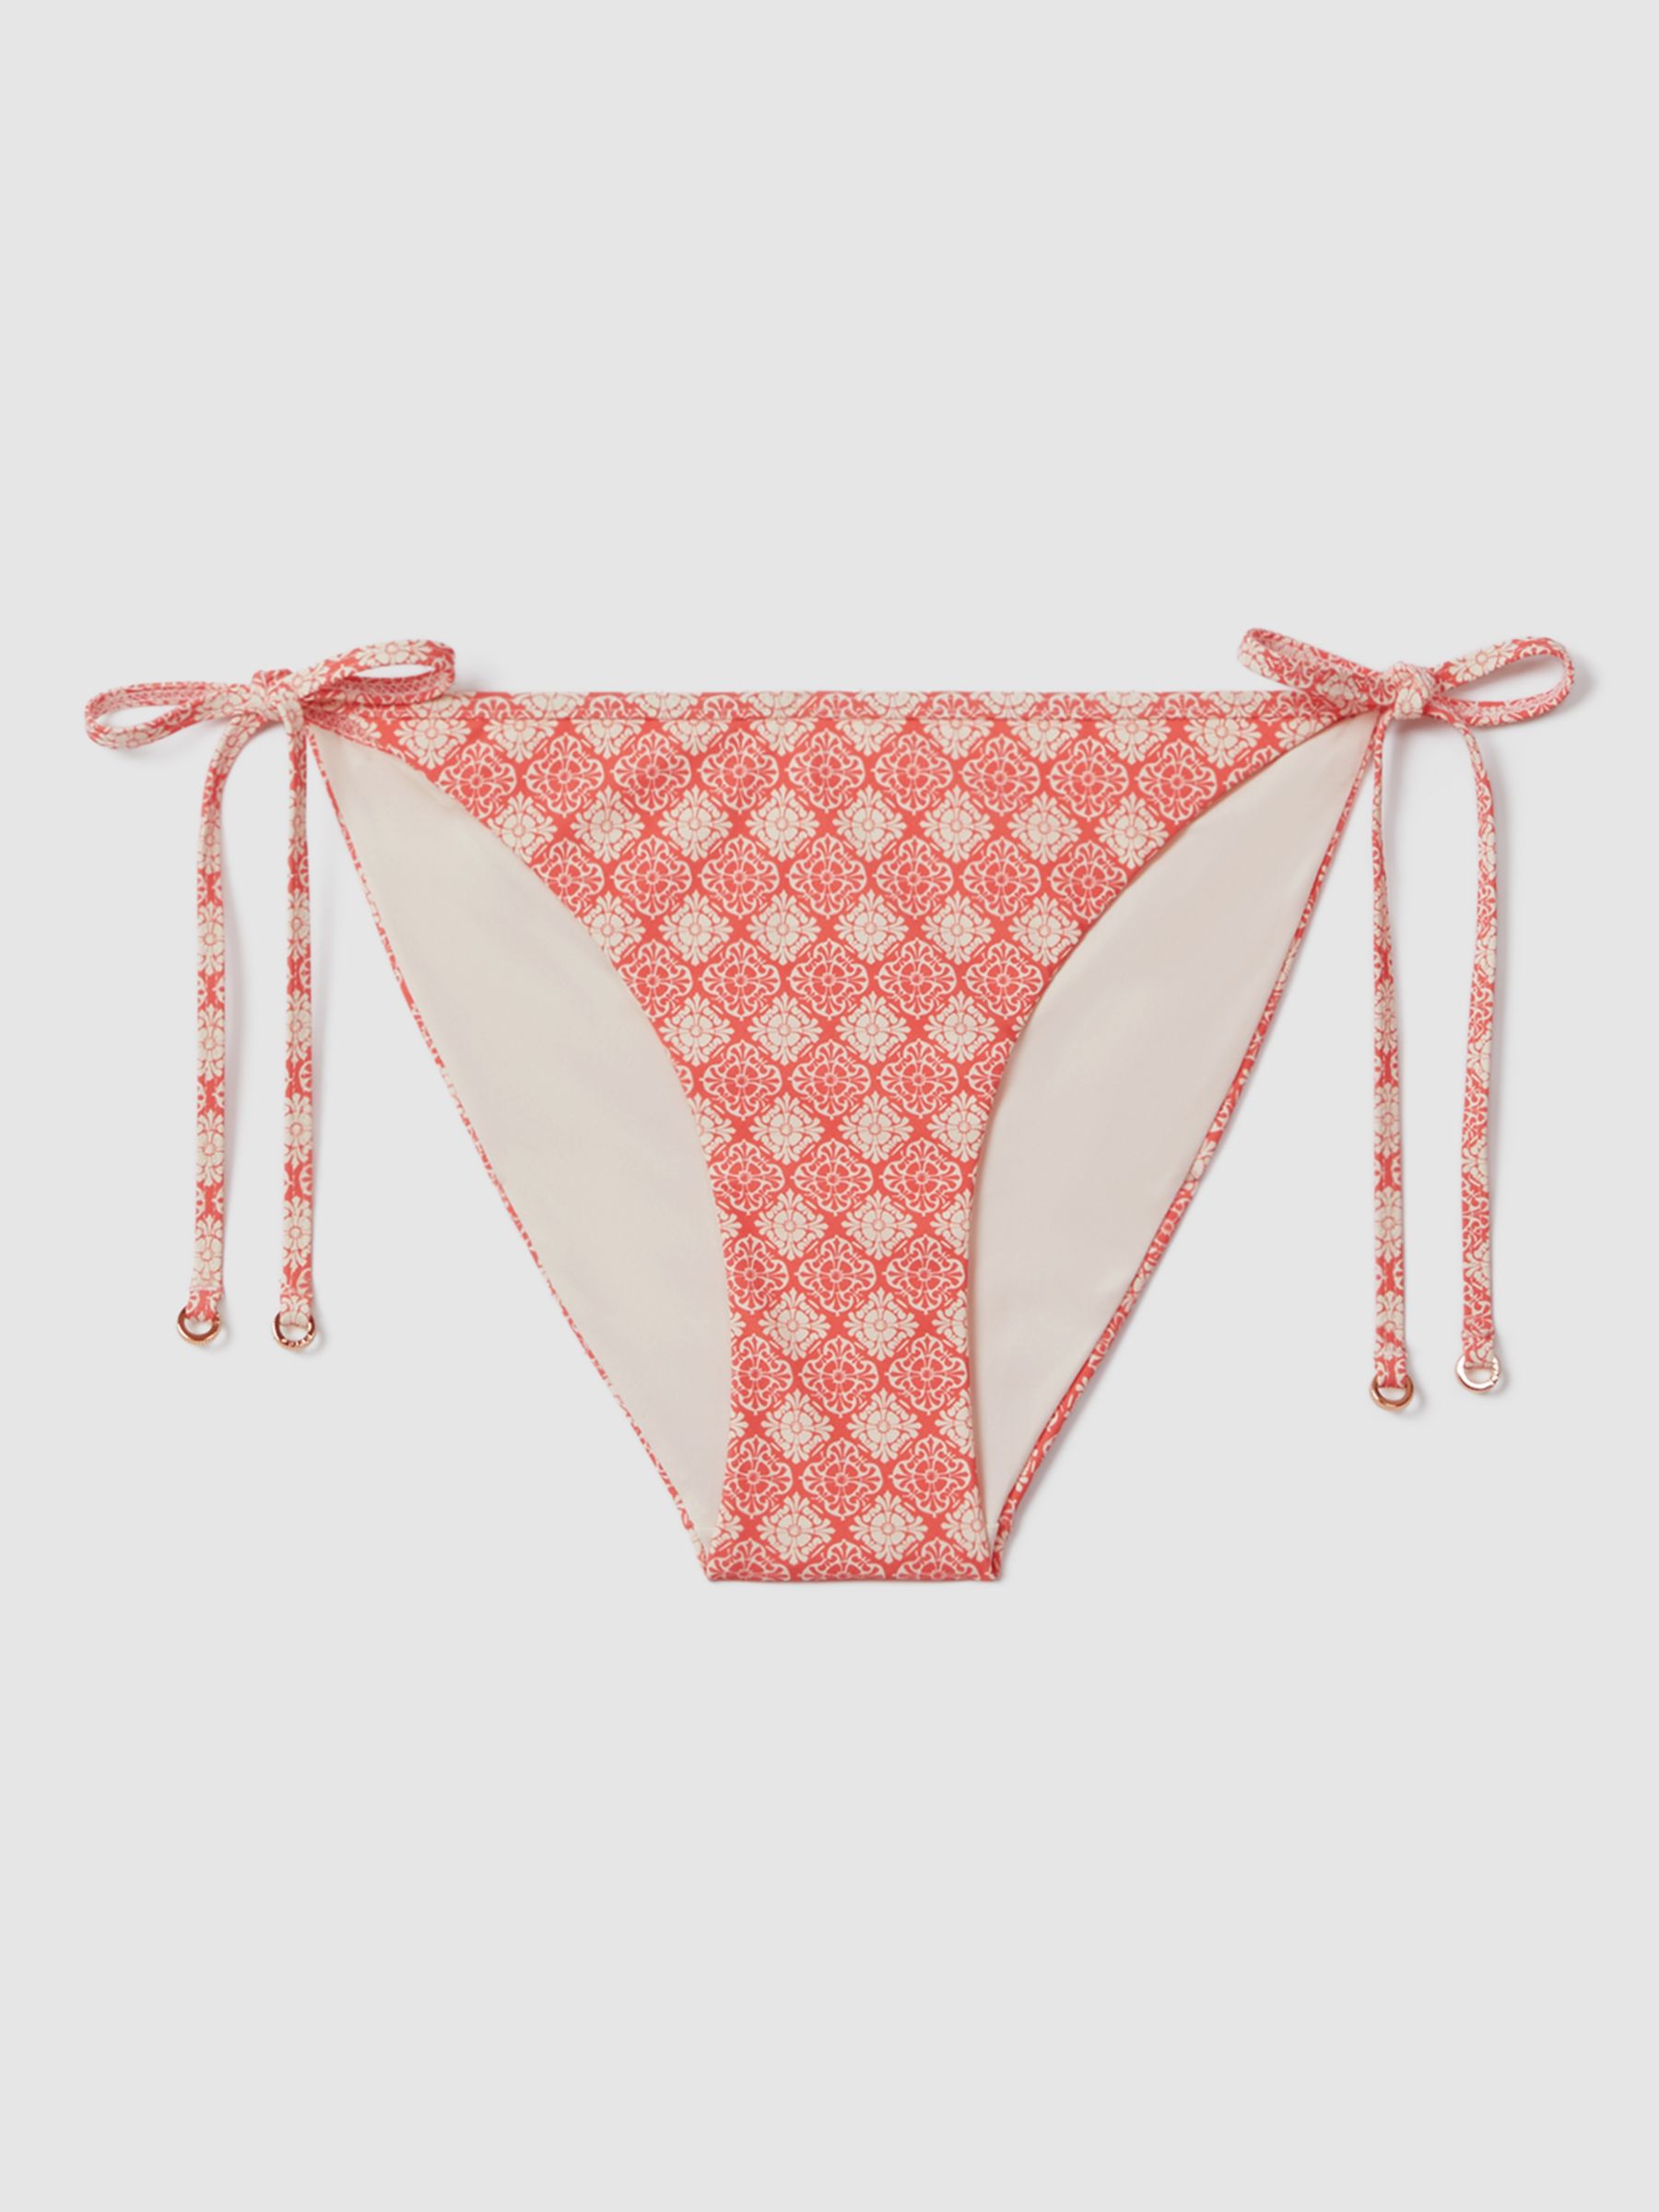 Reiss Kallie Tile Print Tie Side Bikini Bottoms, Cream/Coral, 6